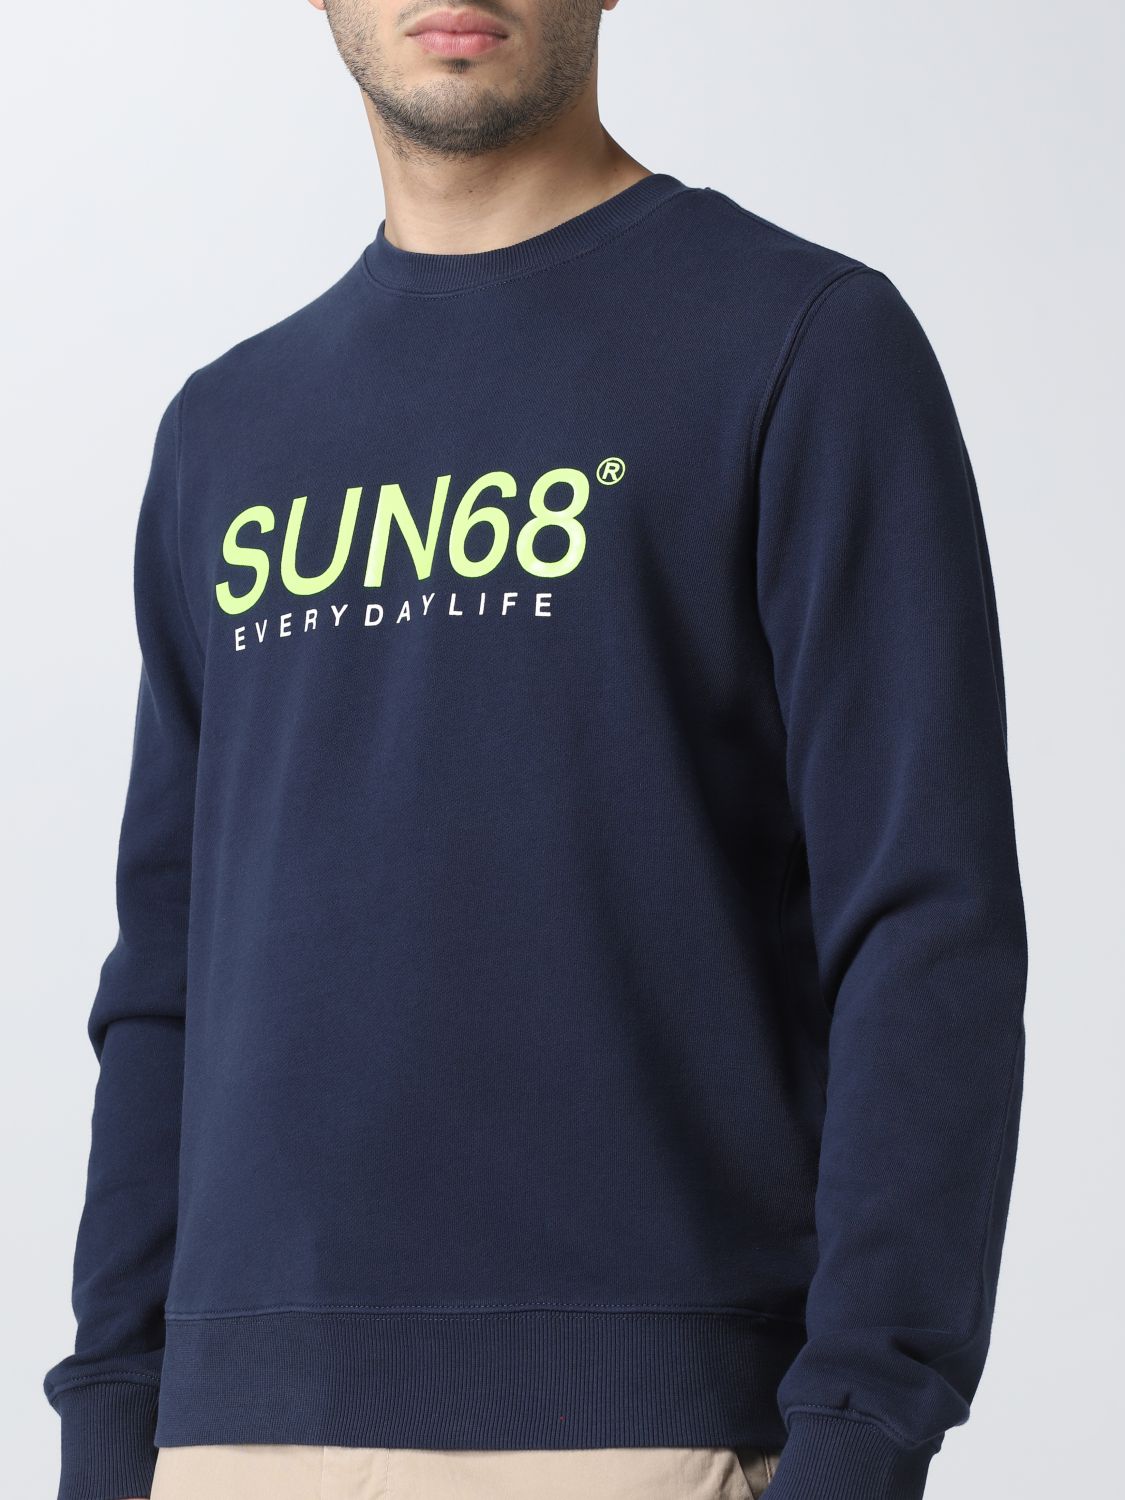 Sweatshirt Sun 68: Sweatshirt Sun 68 homme bleu marine 3